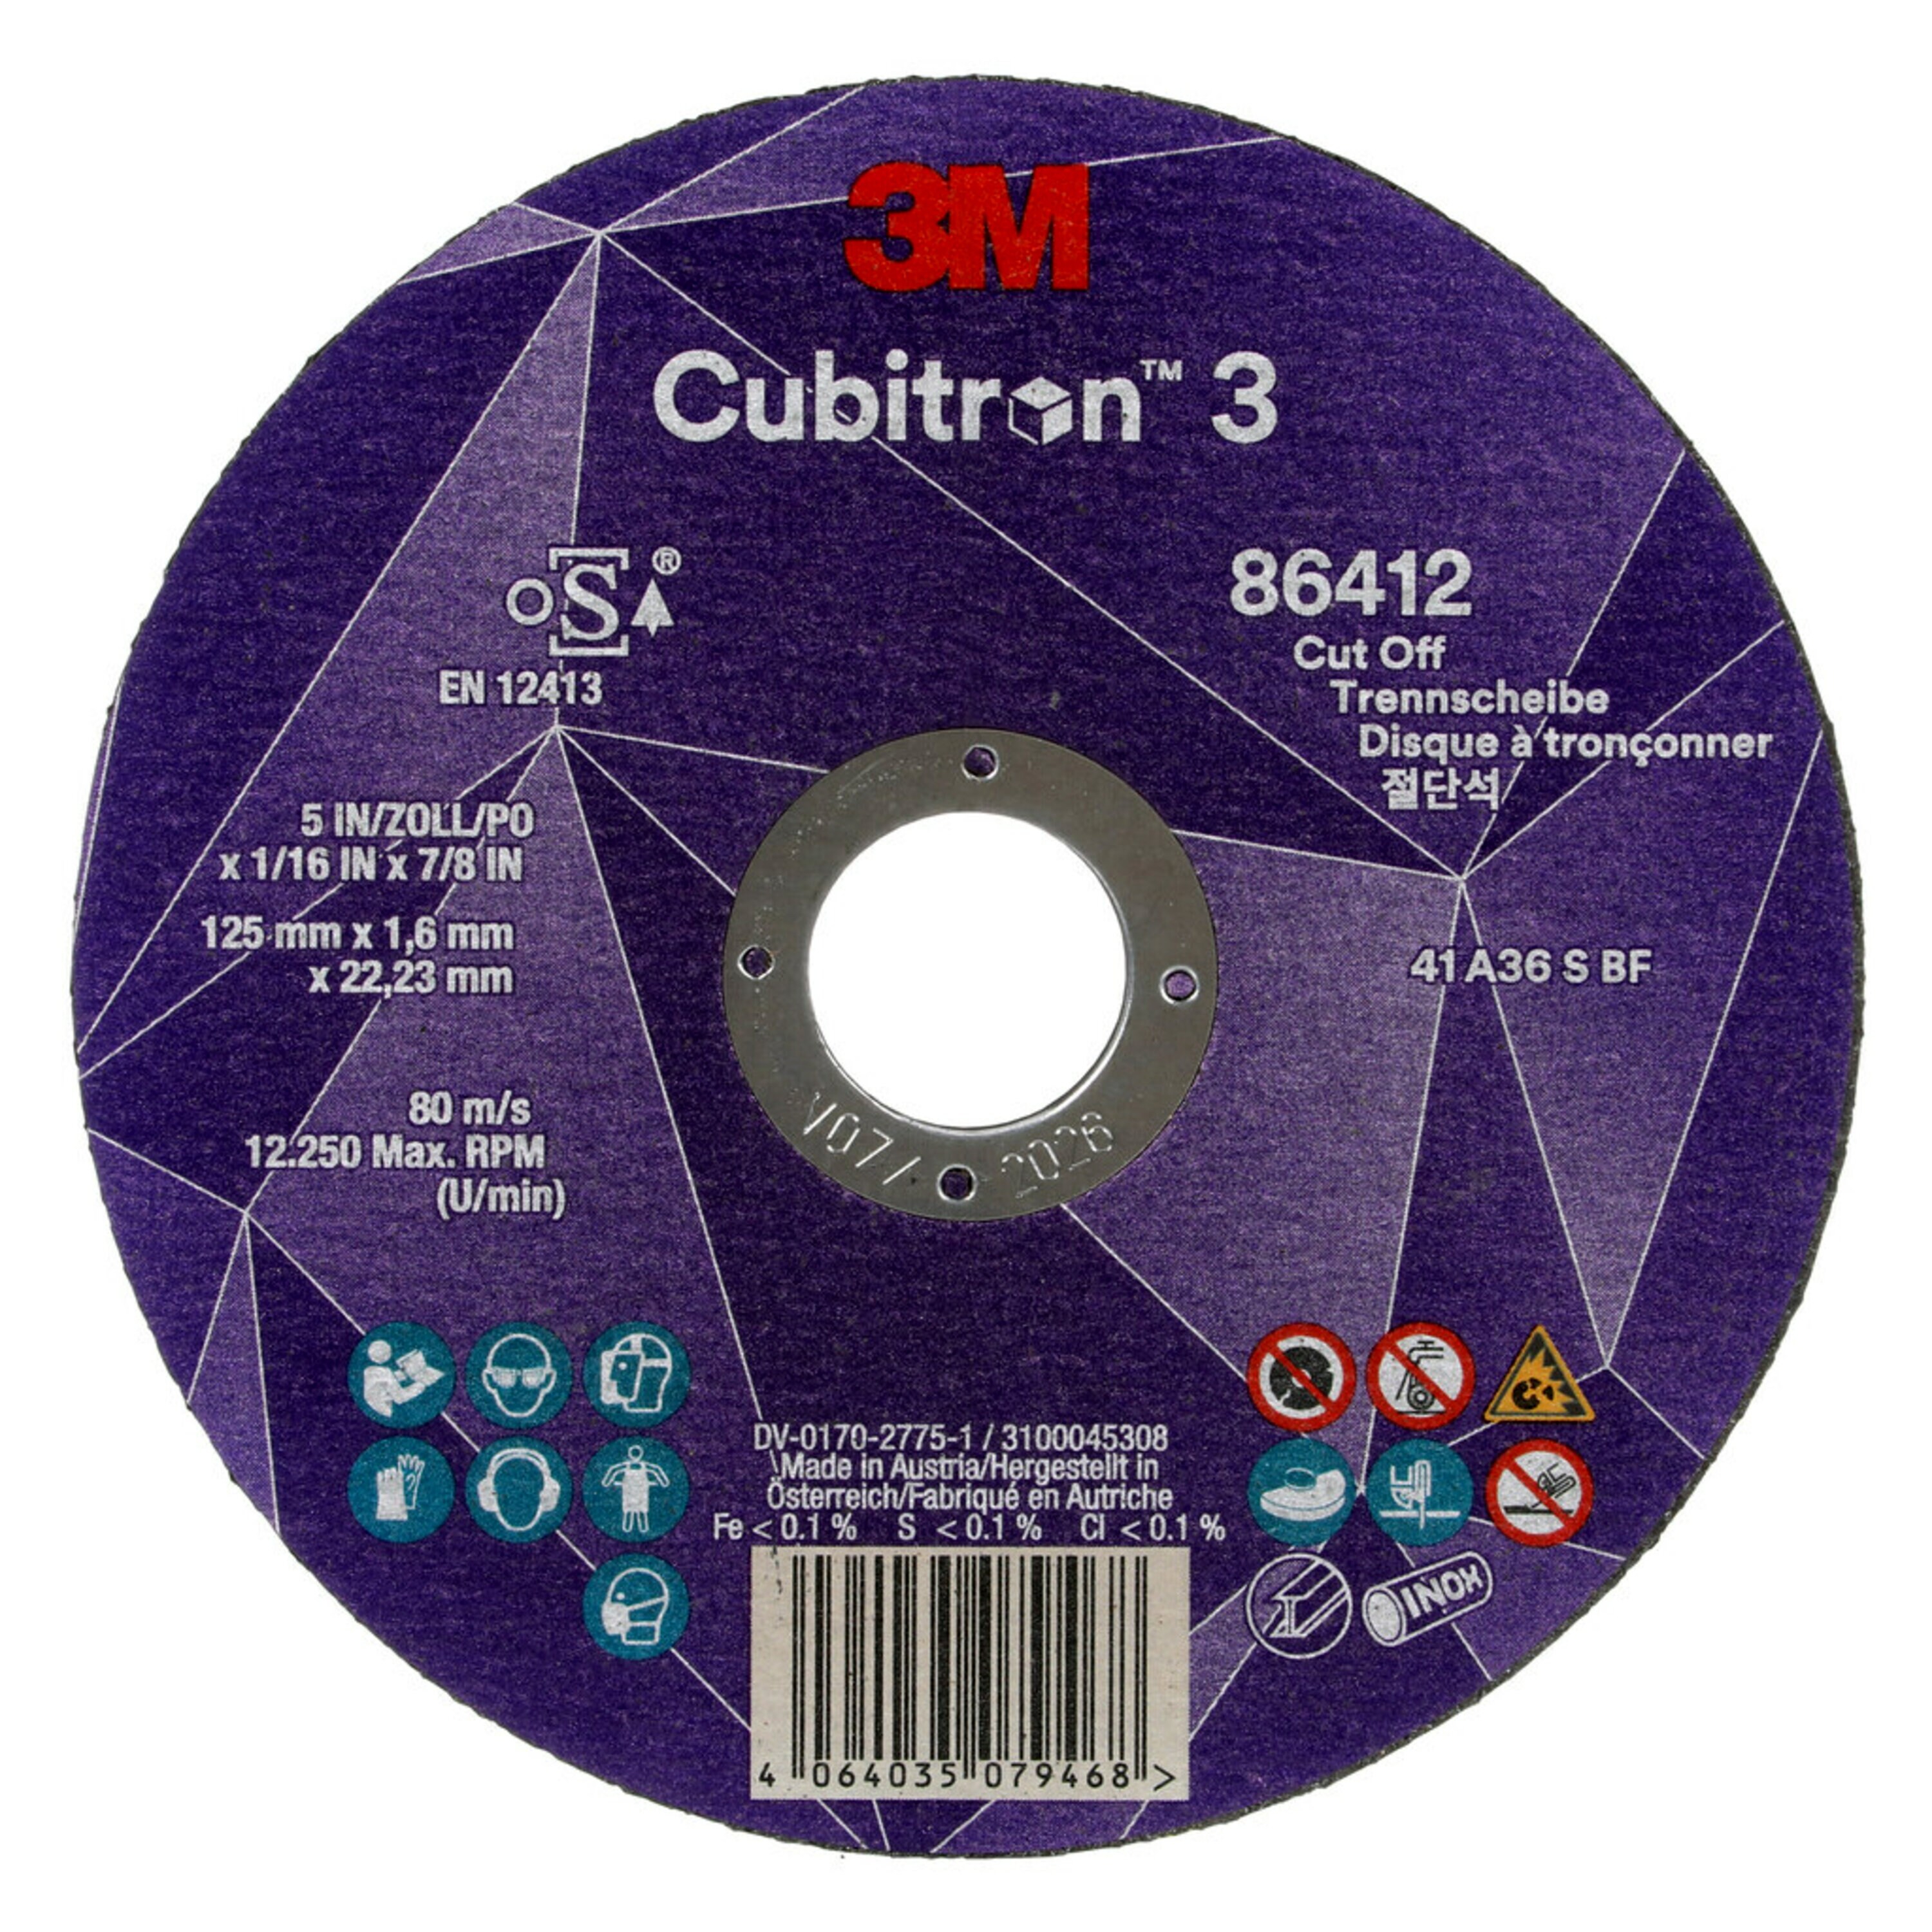 3M Cubitron 3 cut-off wheel, 125 mm, 1.6 mm 22.23 mm, 36+, type 41 #86412